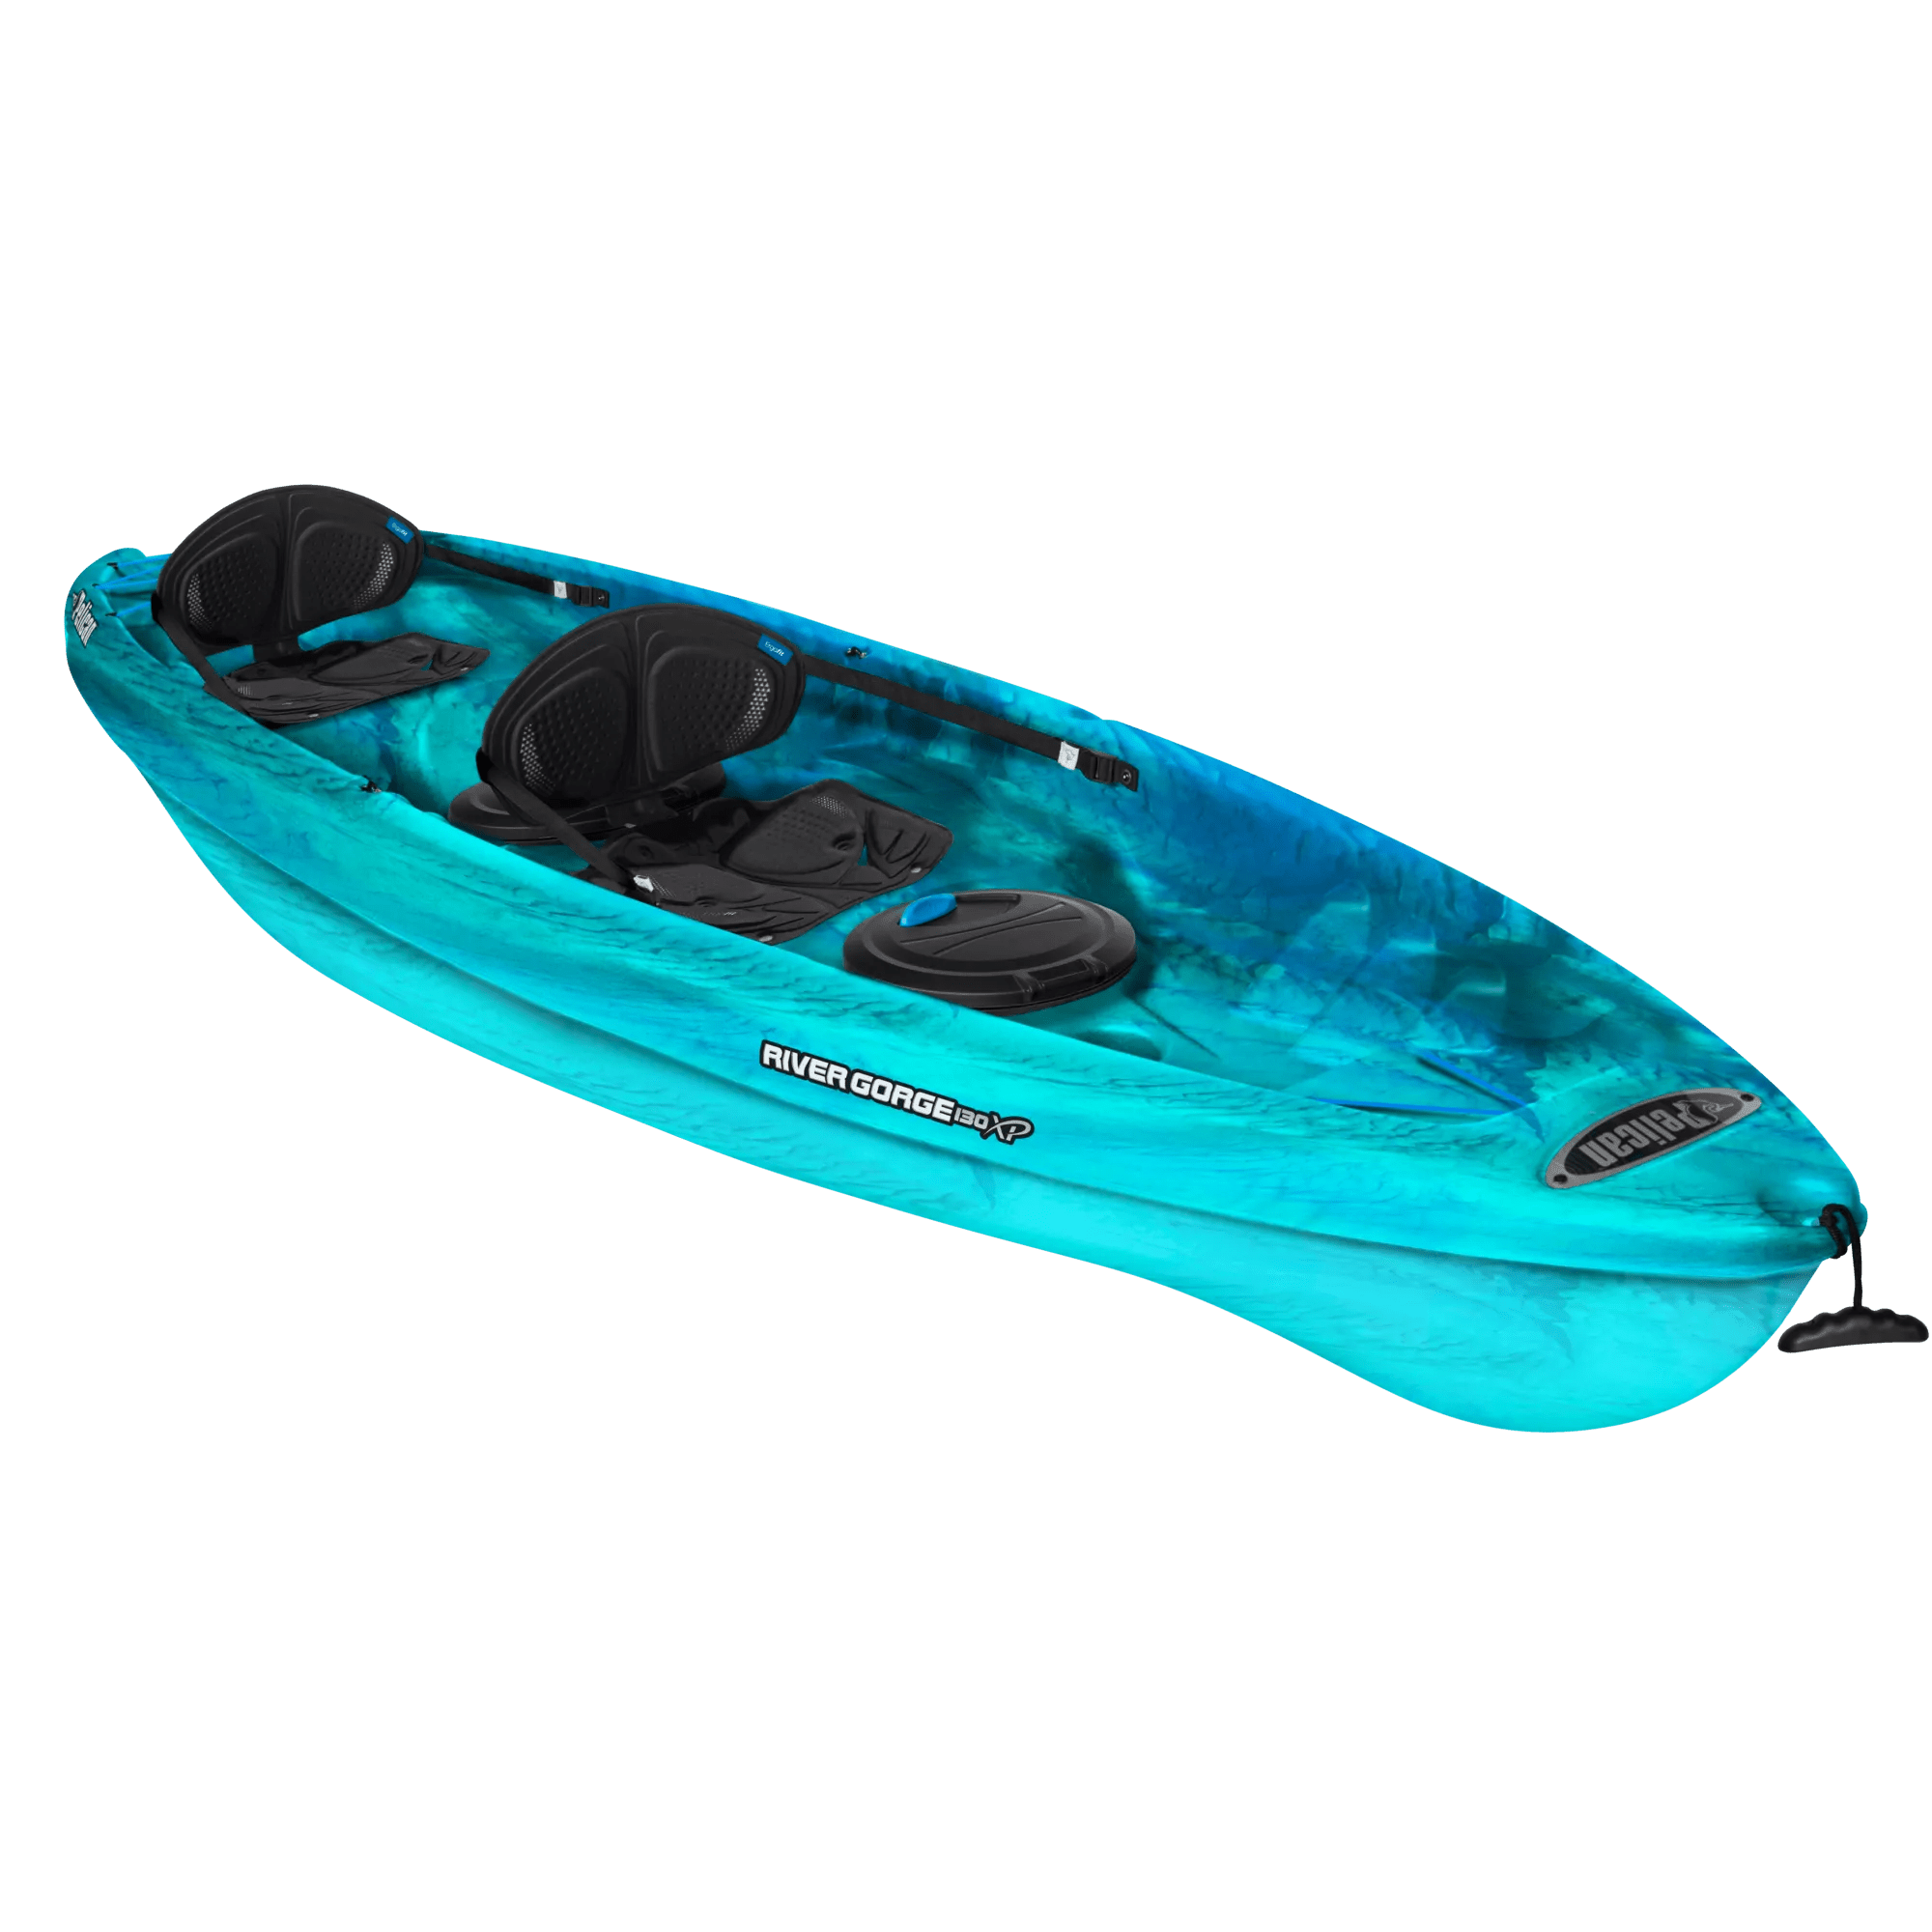 PELICAN - River Gorge 130XP Tandem Recreational Kayak - White - KUF13P200-00 - 